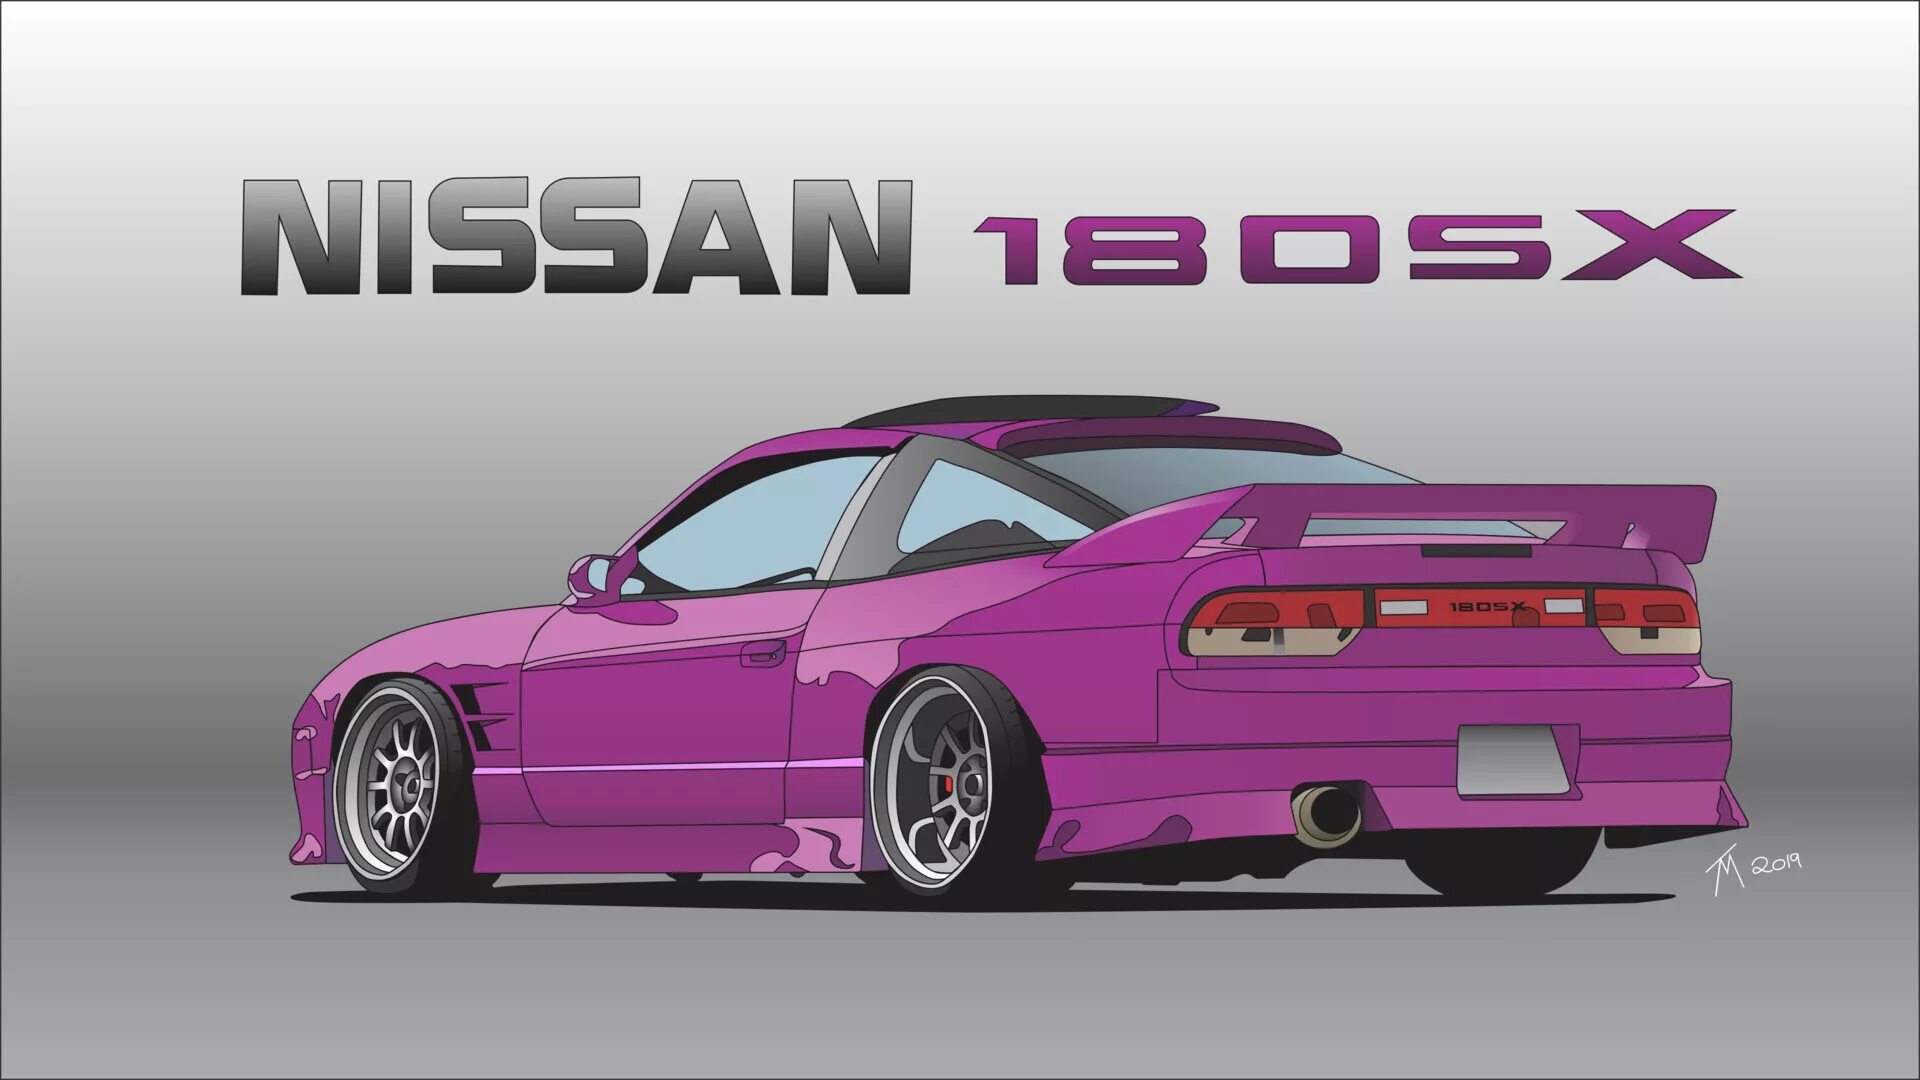 X a s 13. Nissan 180sx. JDM Nissan 180sx арт. Ниссан 180 SX арт. Nissan 180sx Сакура.